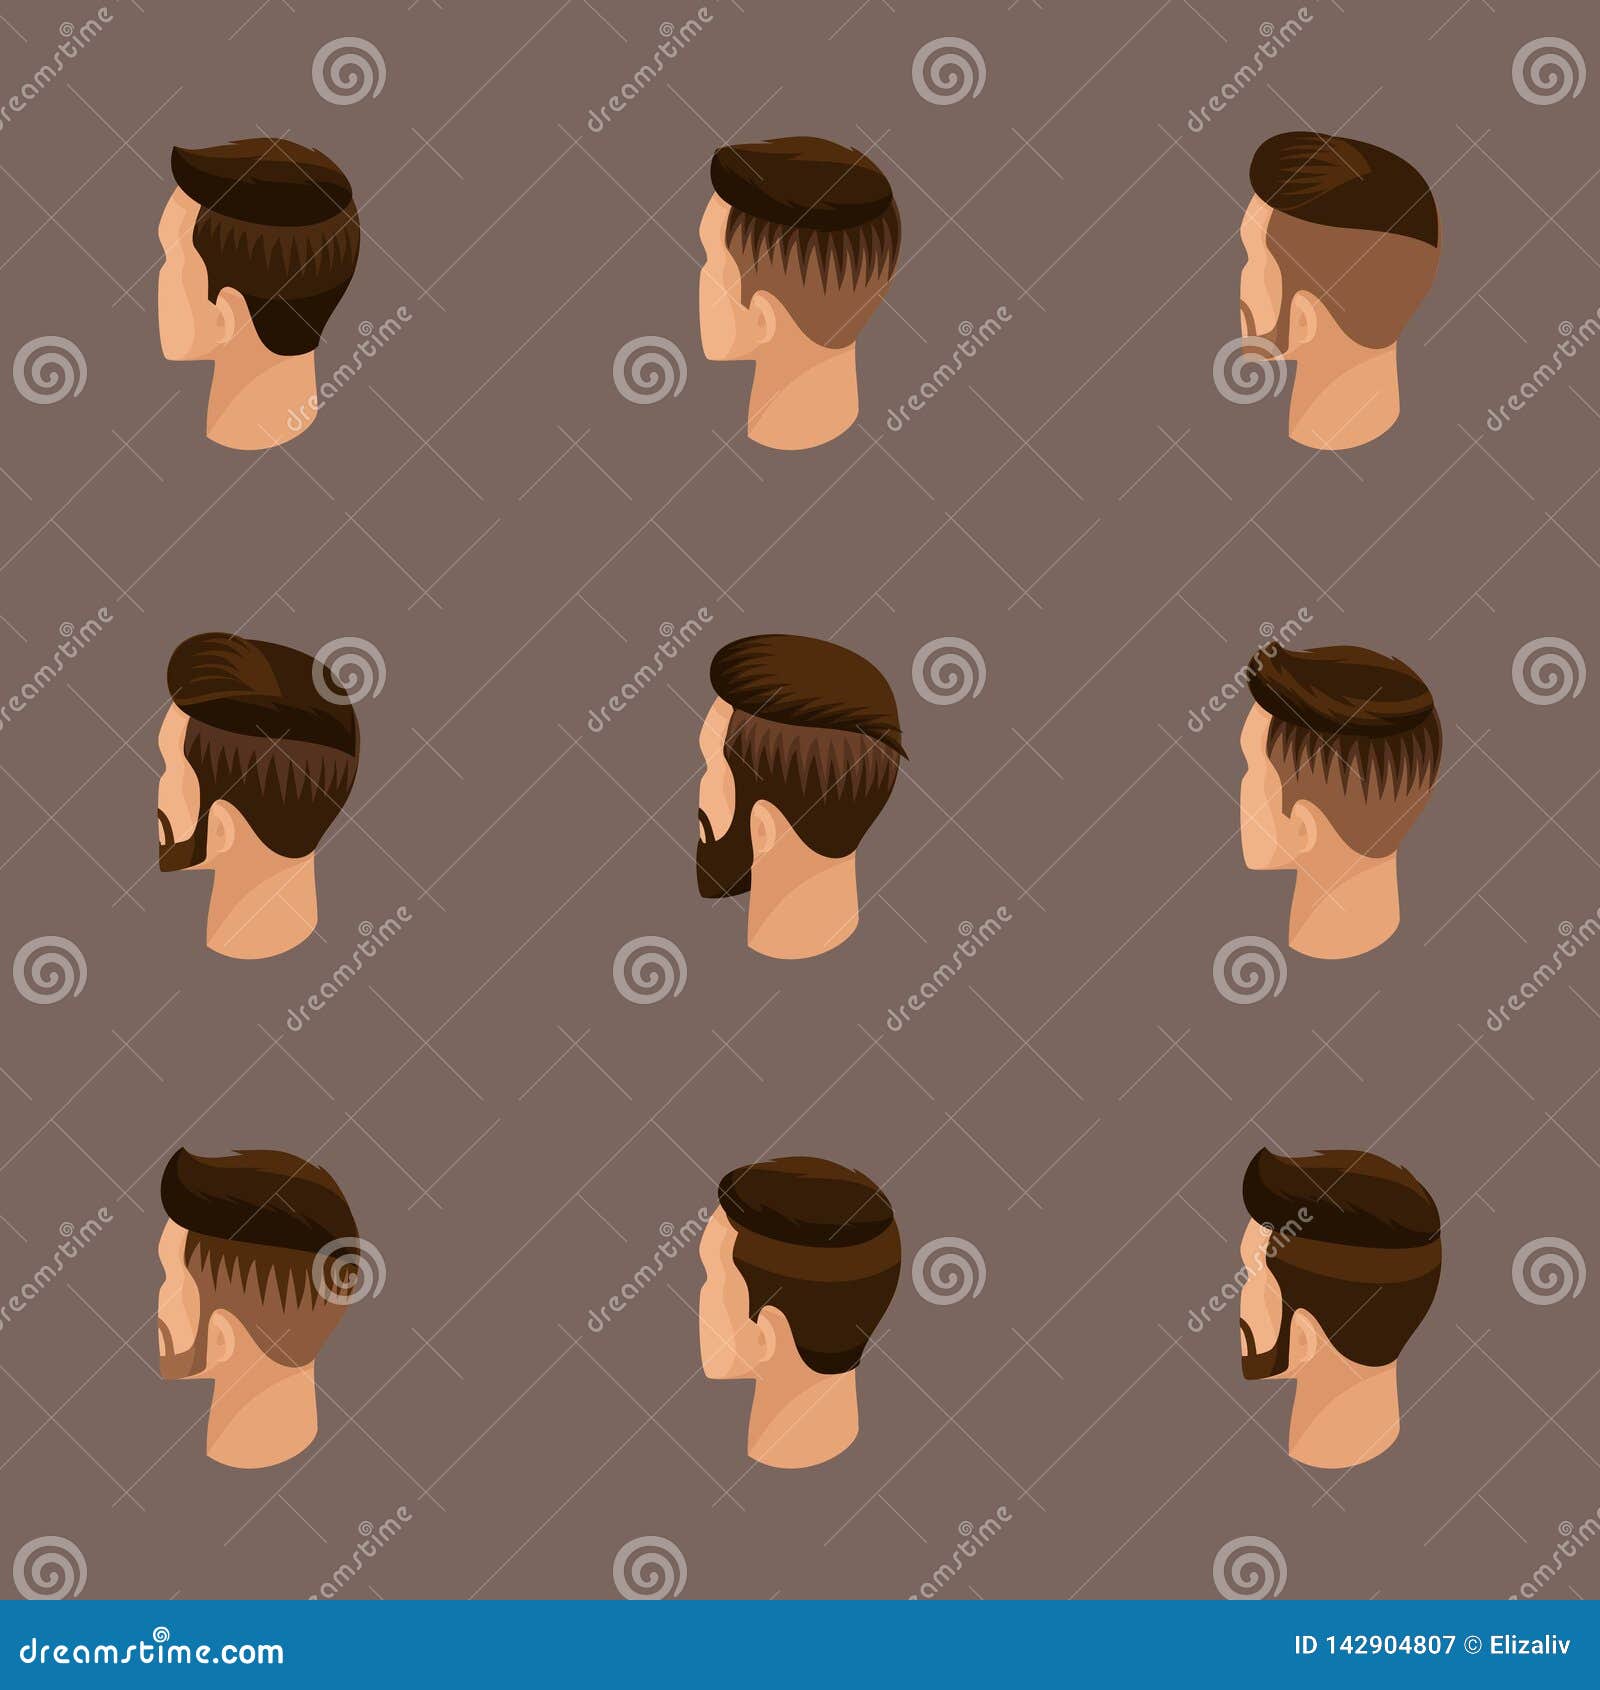 Boys Men Hairstyles, Hair cuts - Apps on Google Play